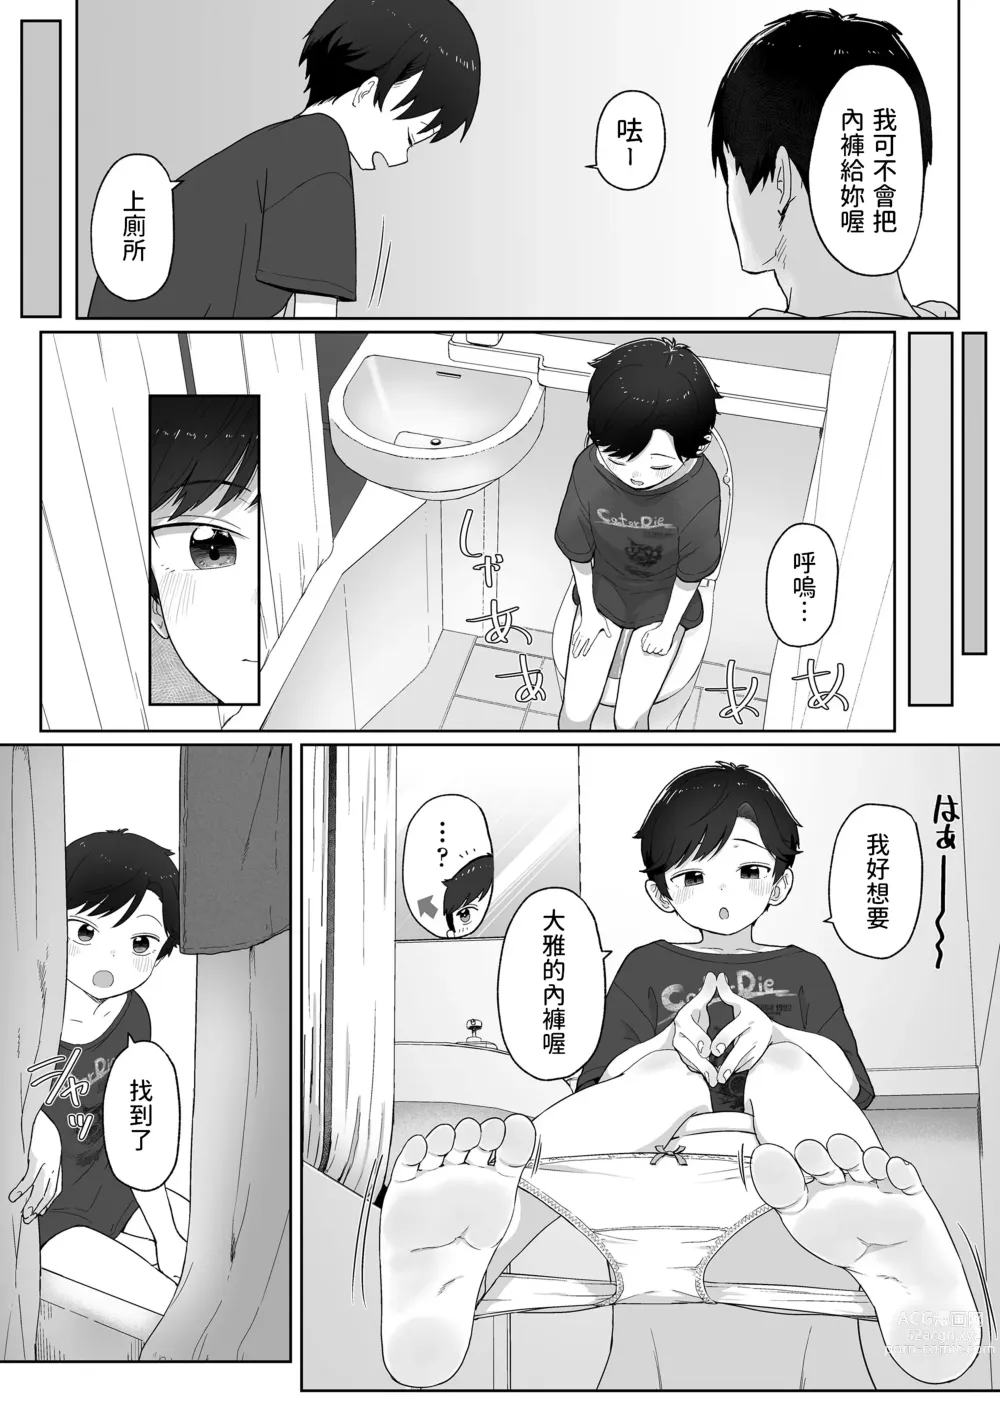 Page 7 of manga Ore ga Taberu kara